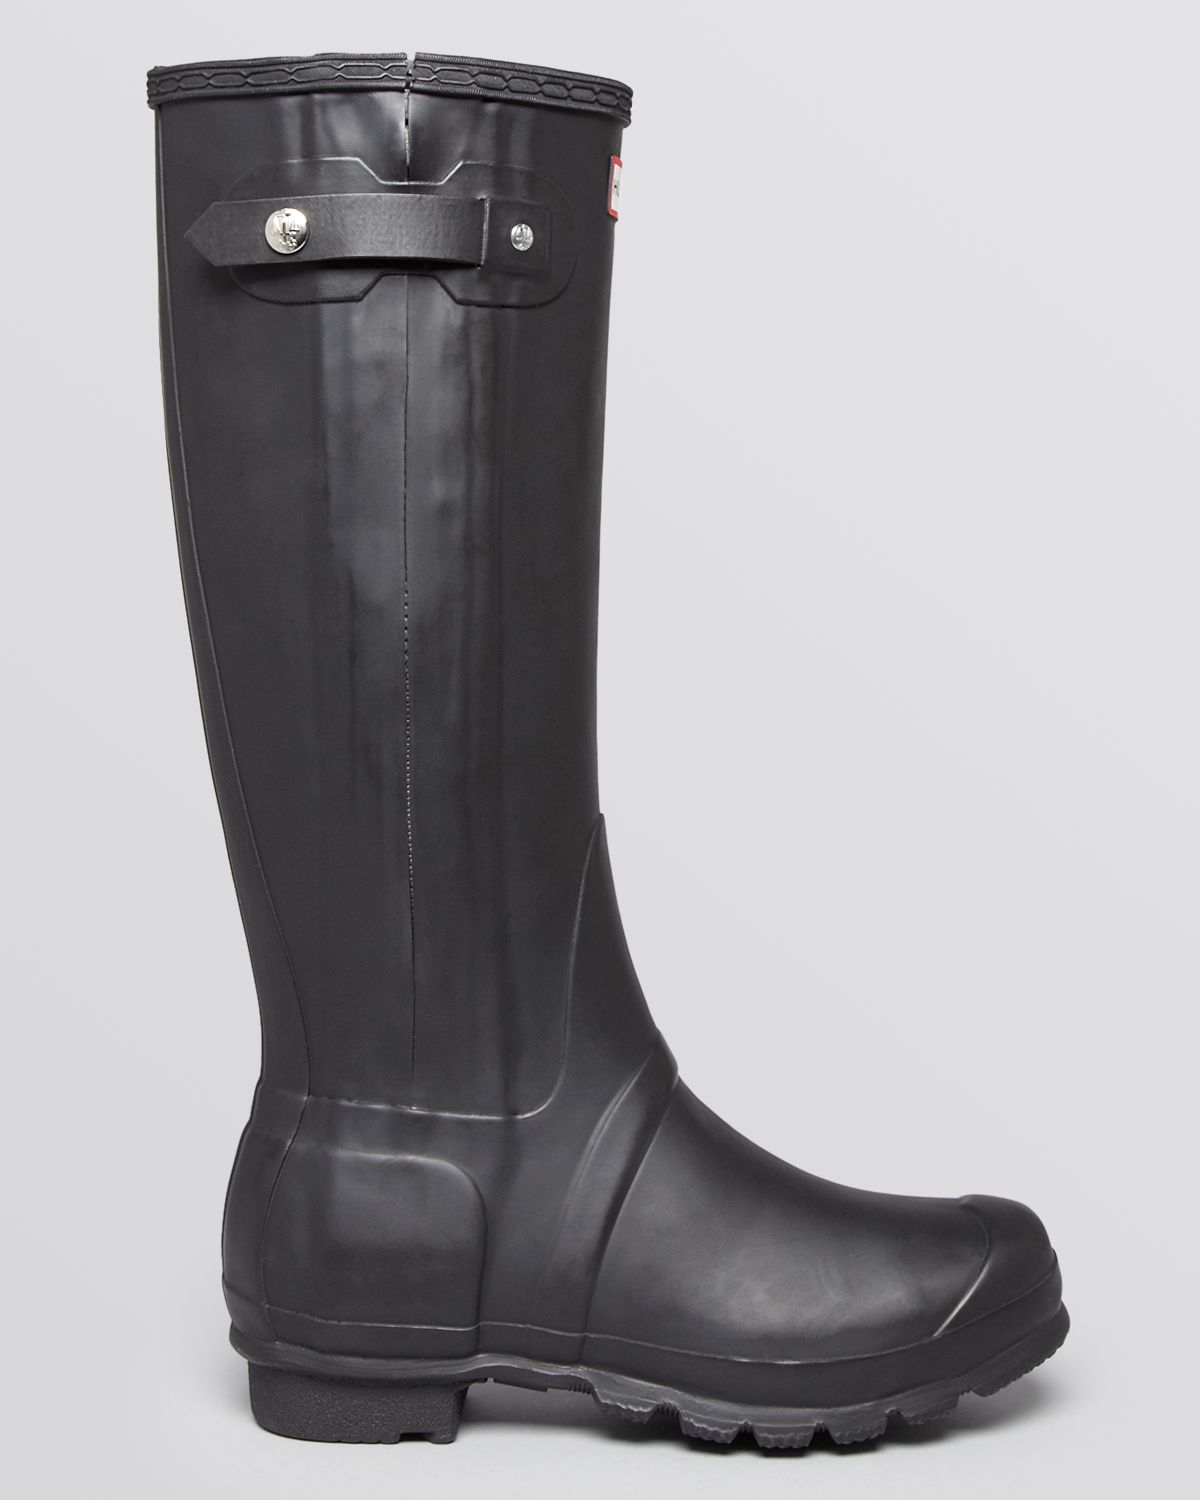 Lyst - HUNTER Rain Rain Boots - Original Slim Zip Textured in Black